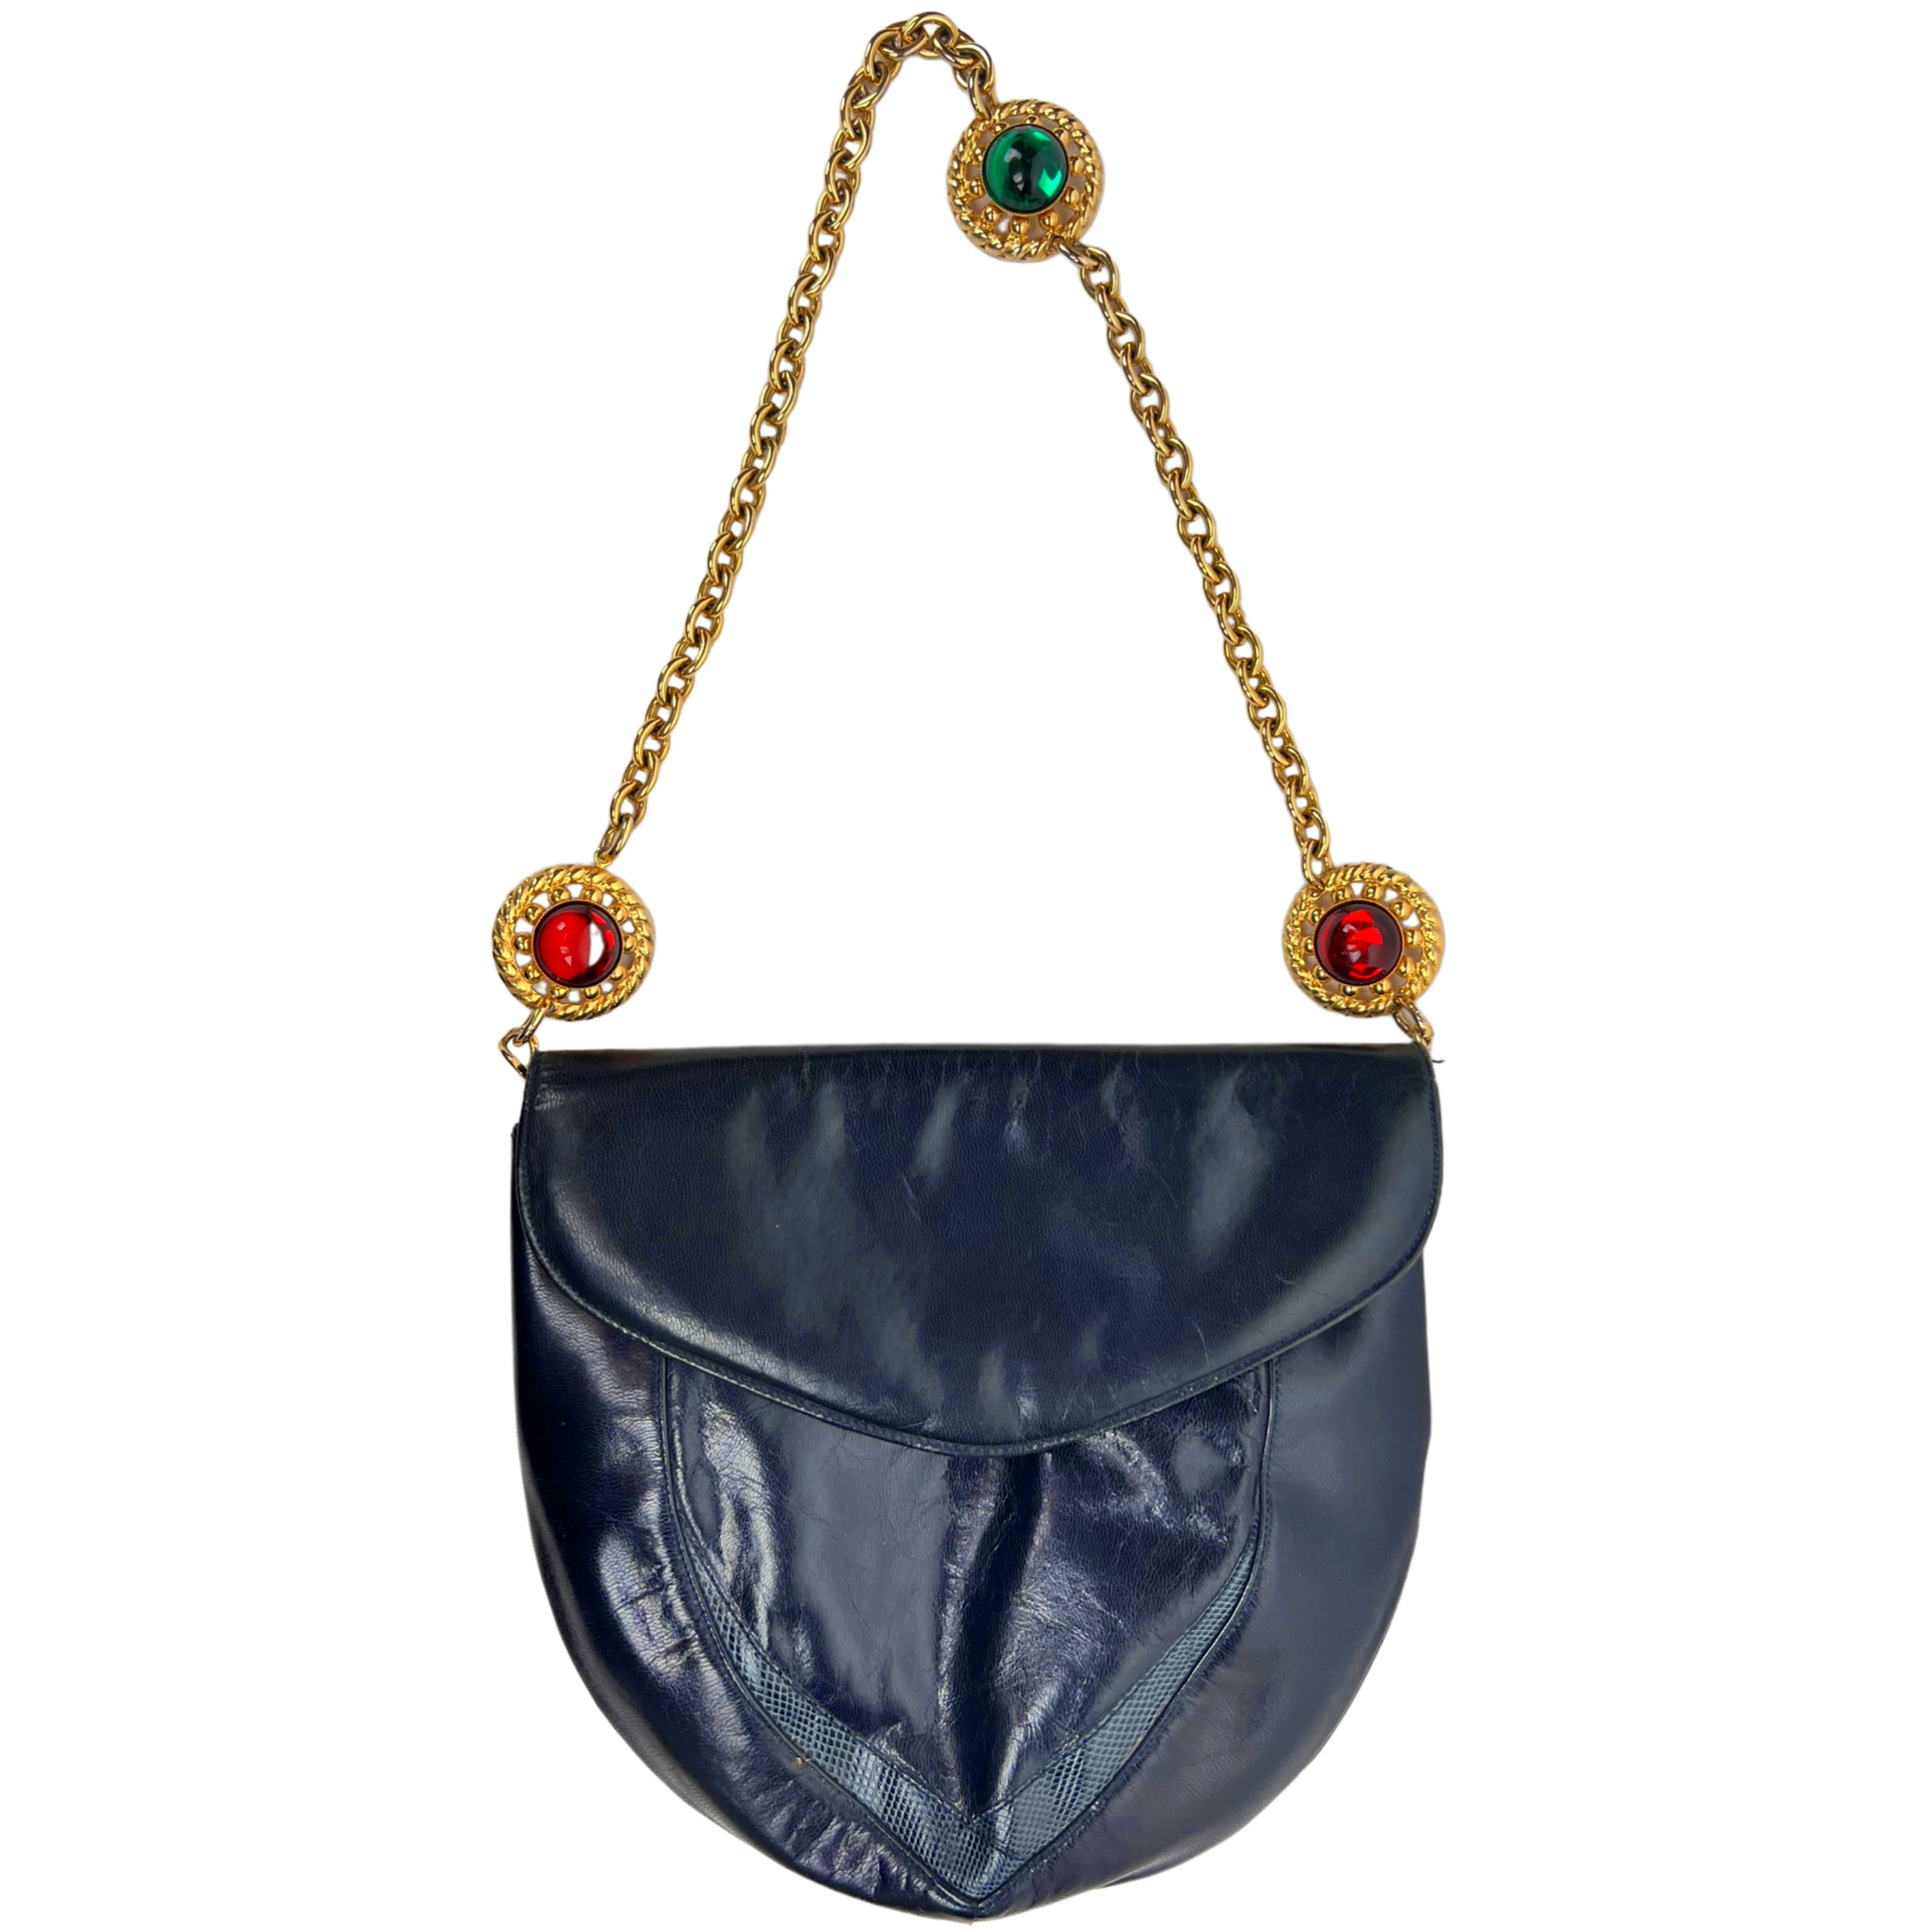 Clutch Purse, Evening Bag, Leather Wristlet | Mayko Bags